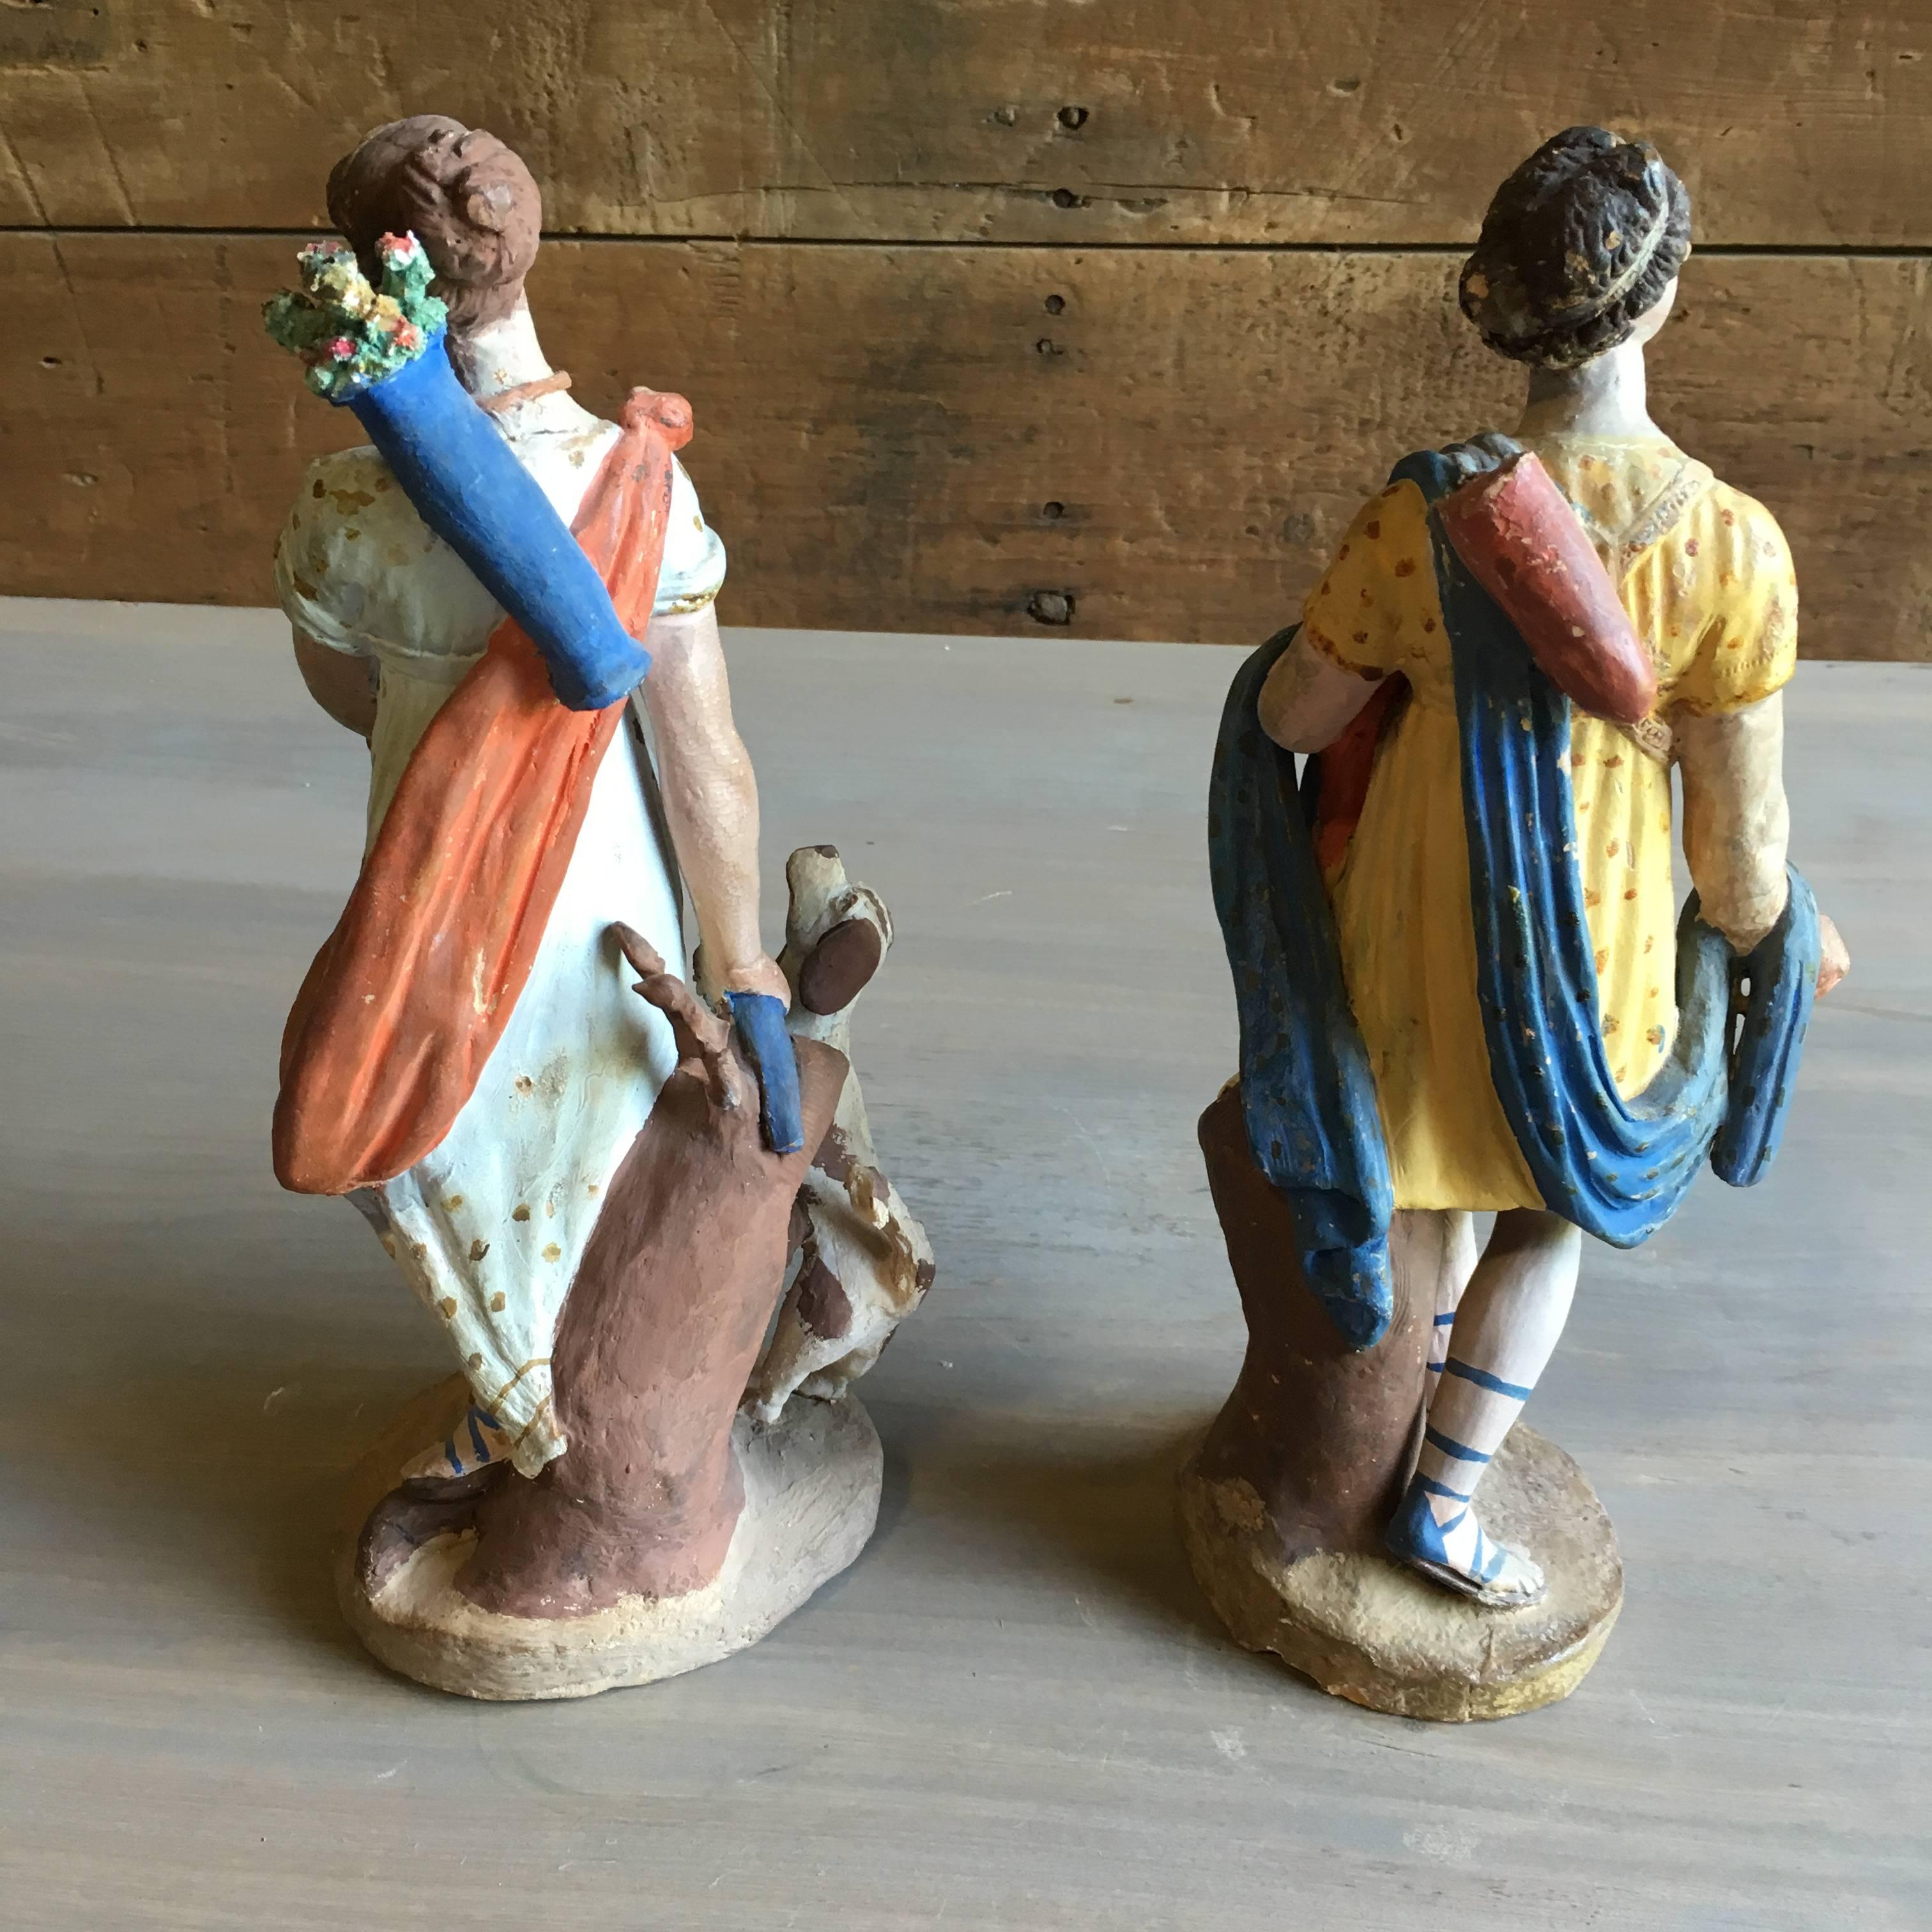 18th century figurines